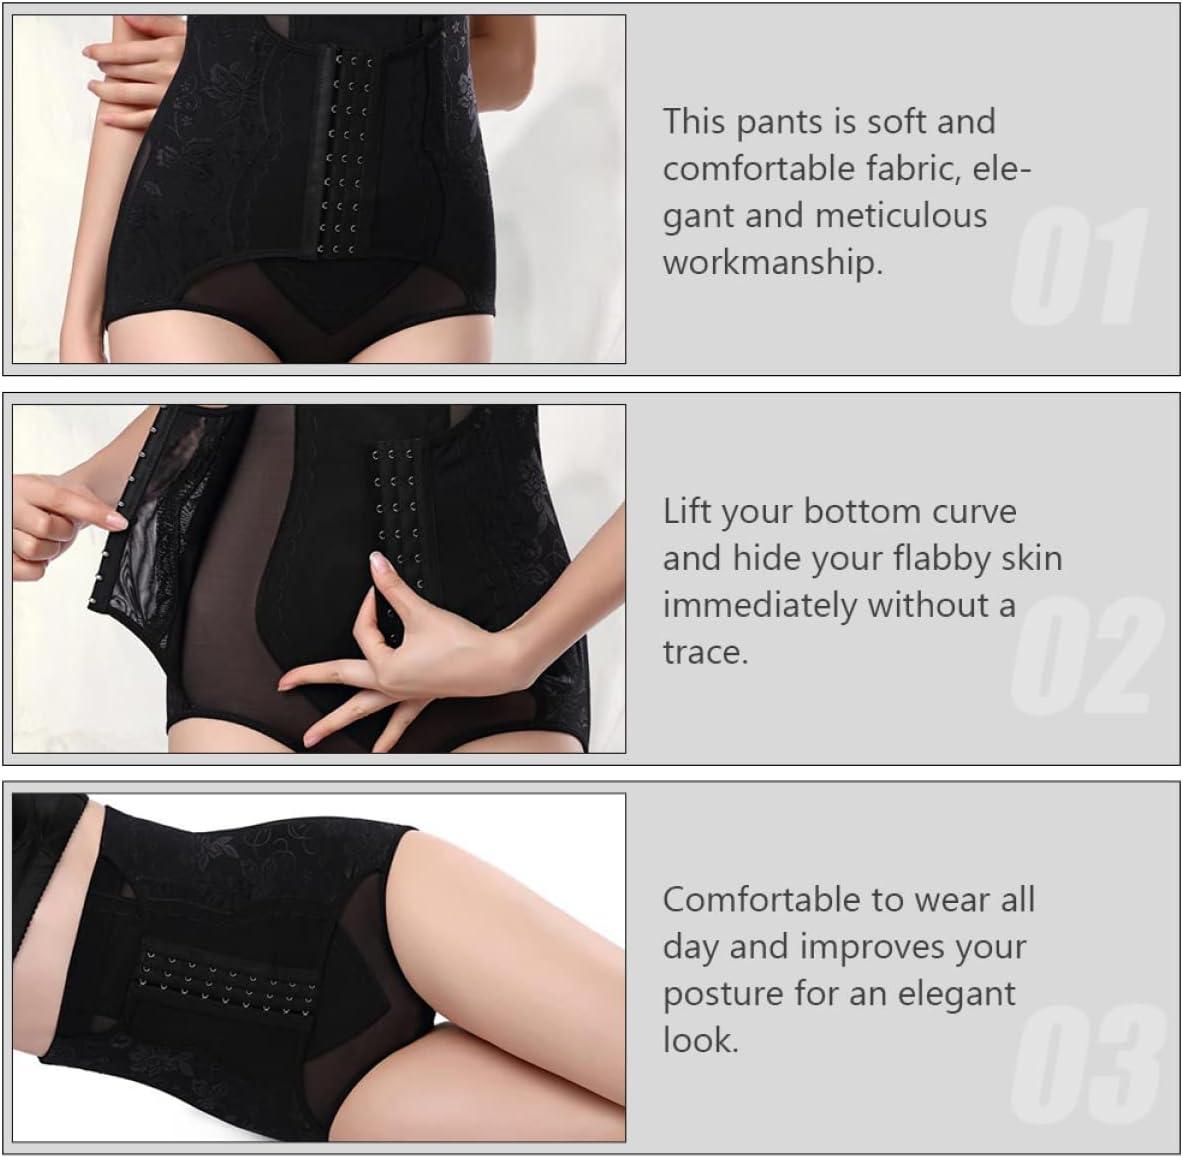 Healeved 1pc Corset Belts Band Size Body Panties Pants Sauna Shape